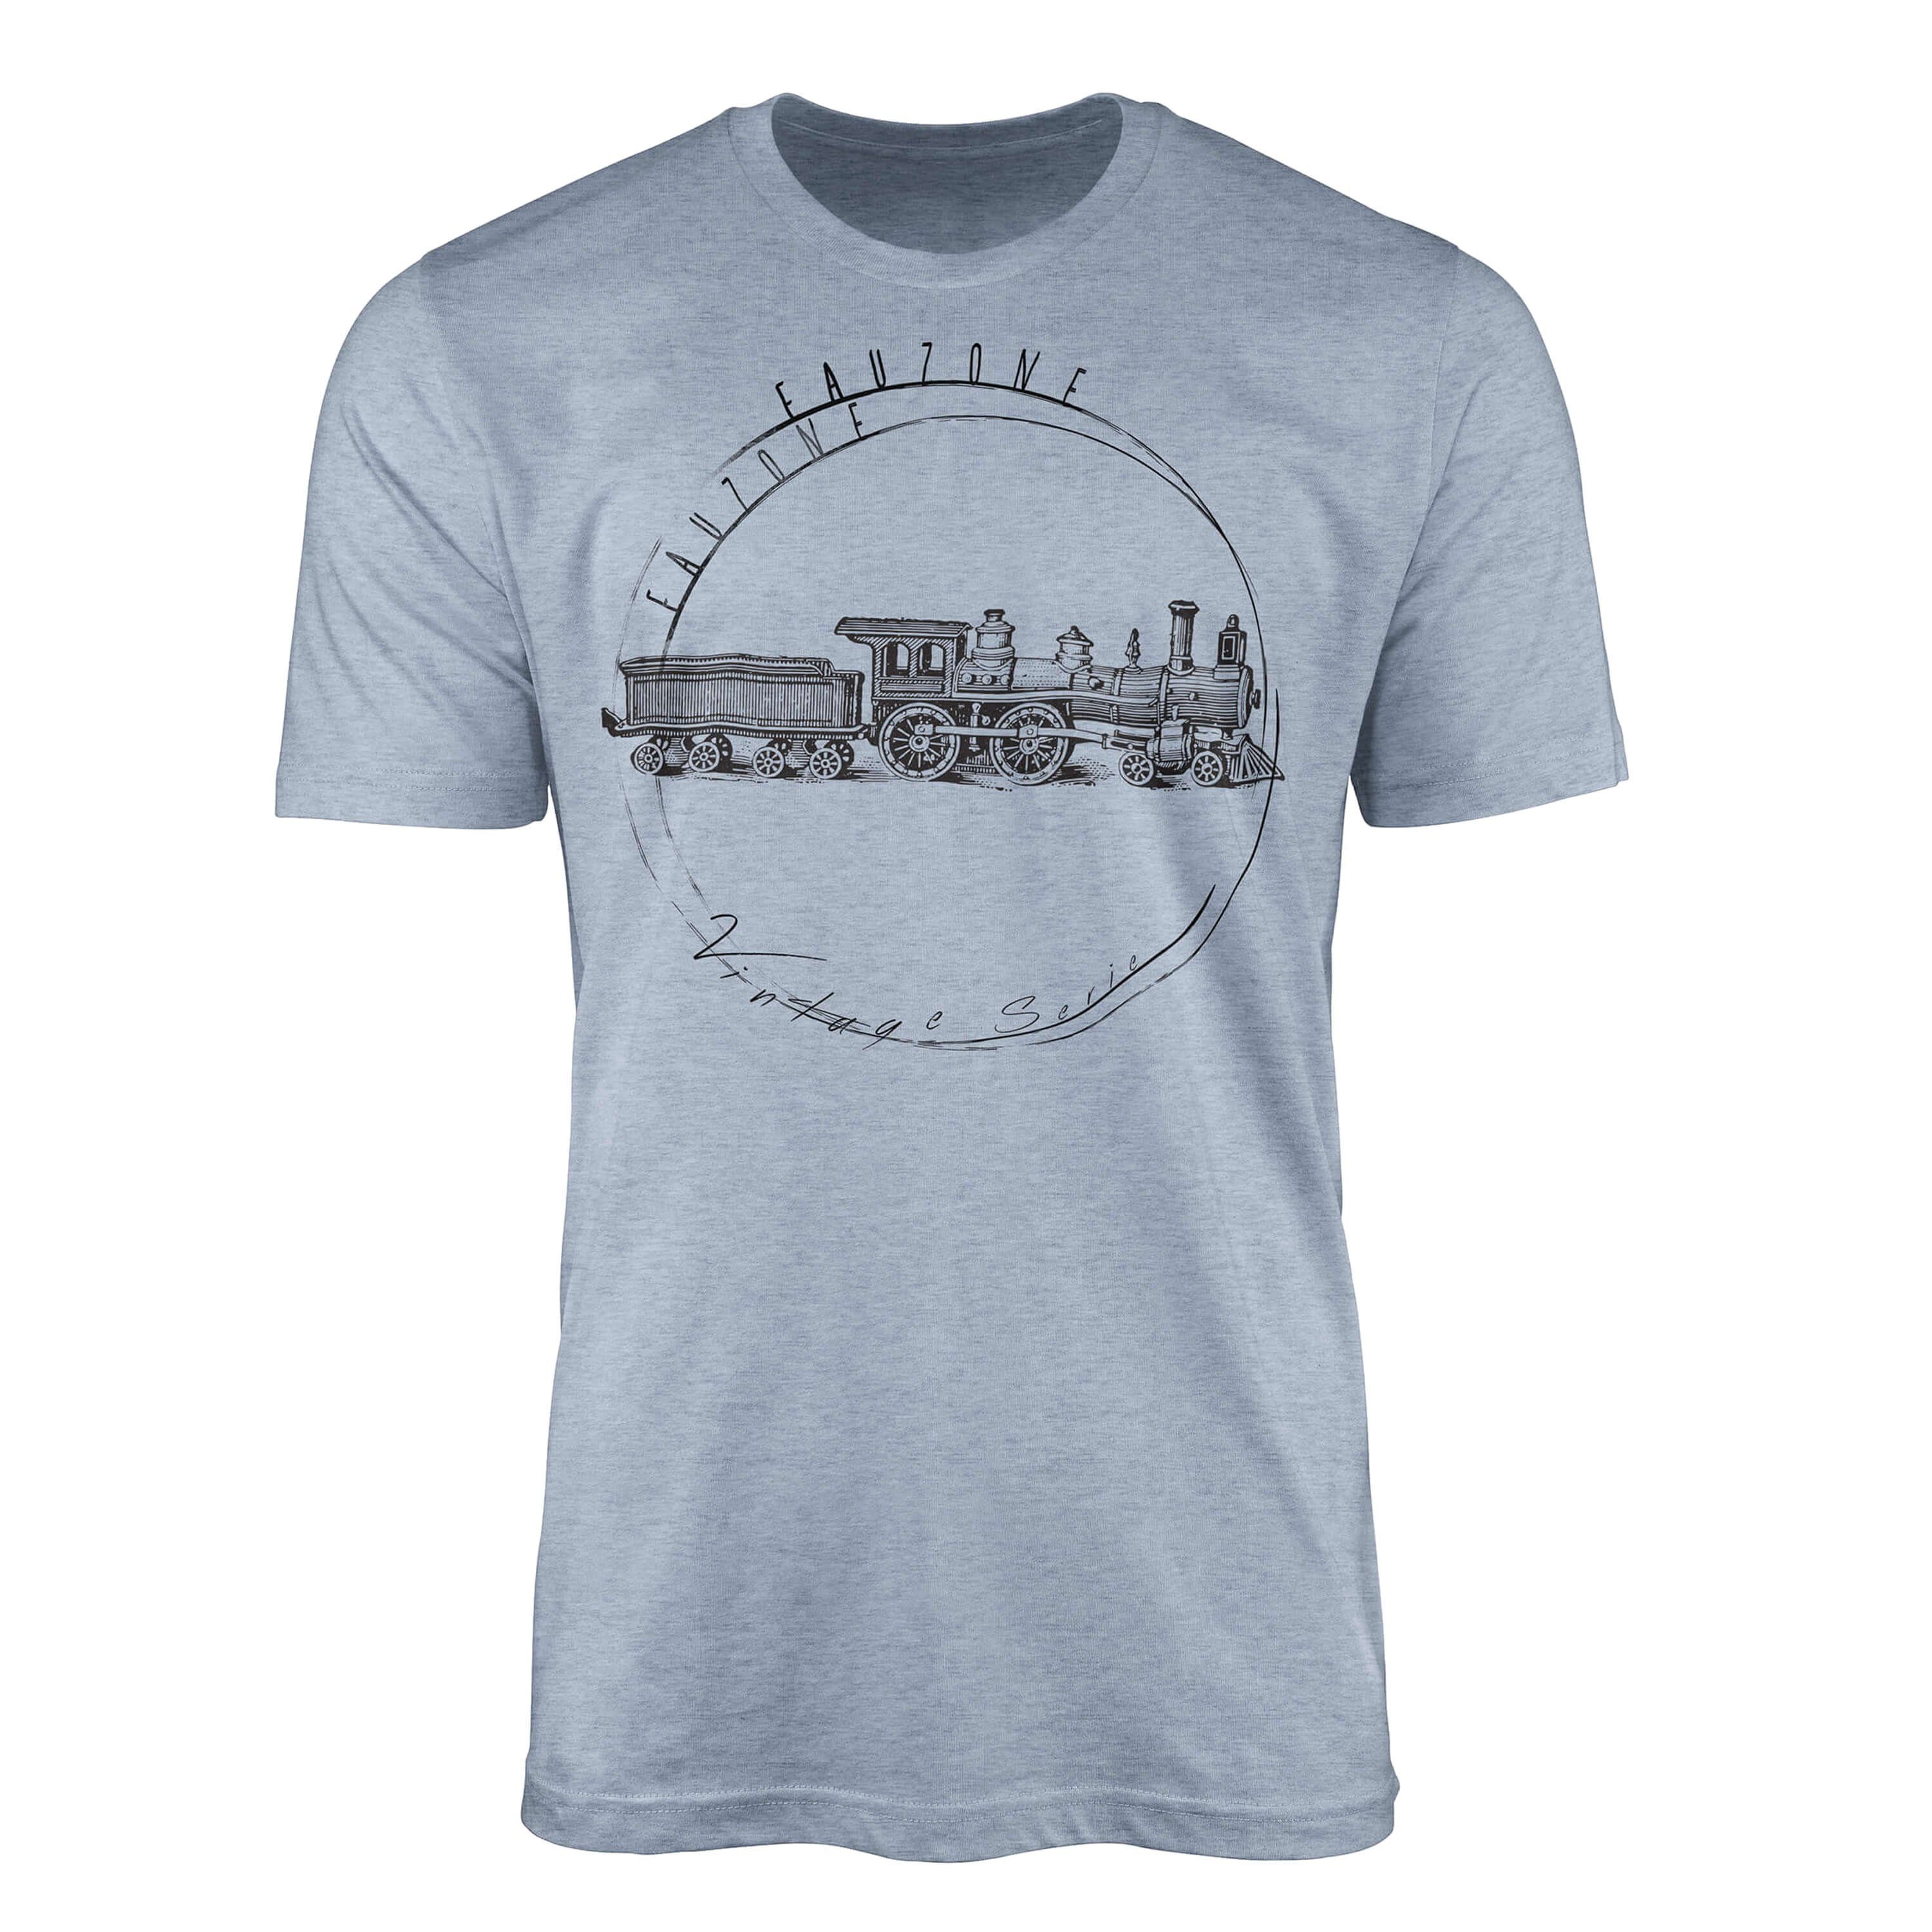 Sinus Art T-Shirt Vintage Herren T-Shirt Lokomotive Stonewash Denim